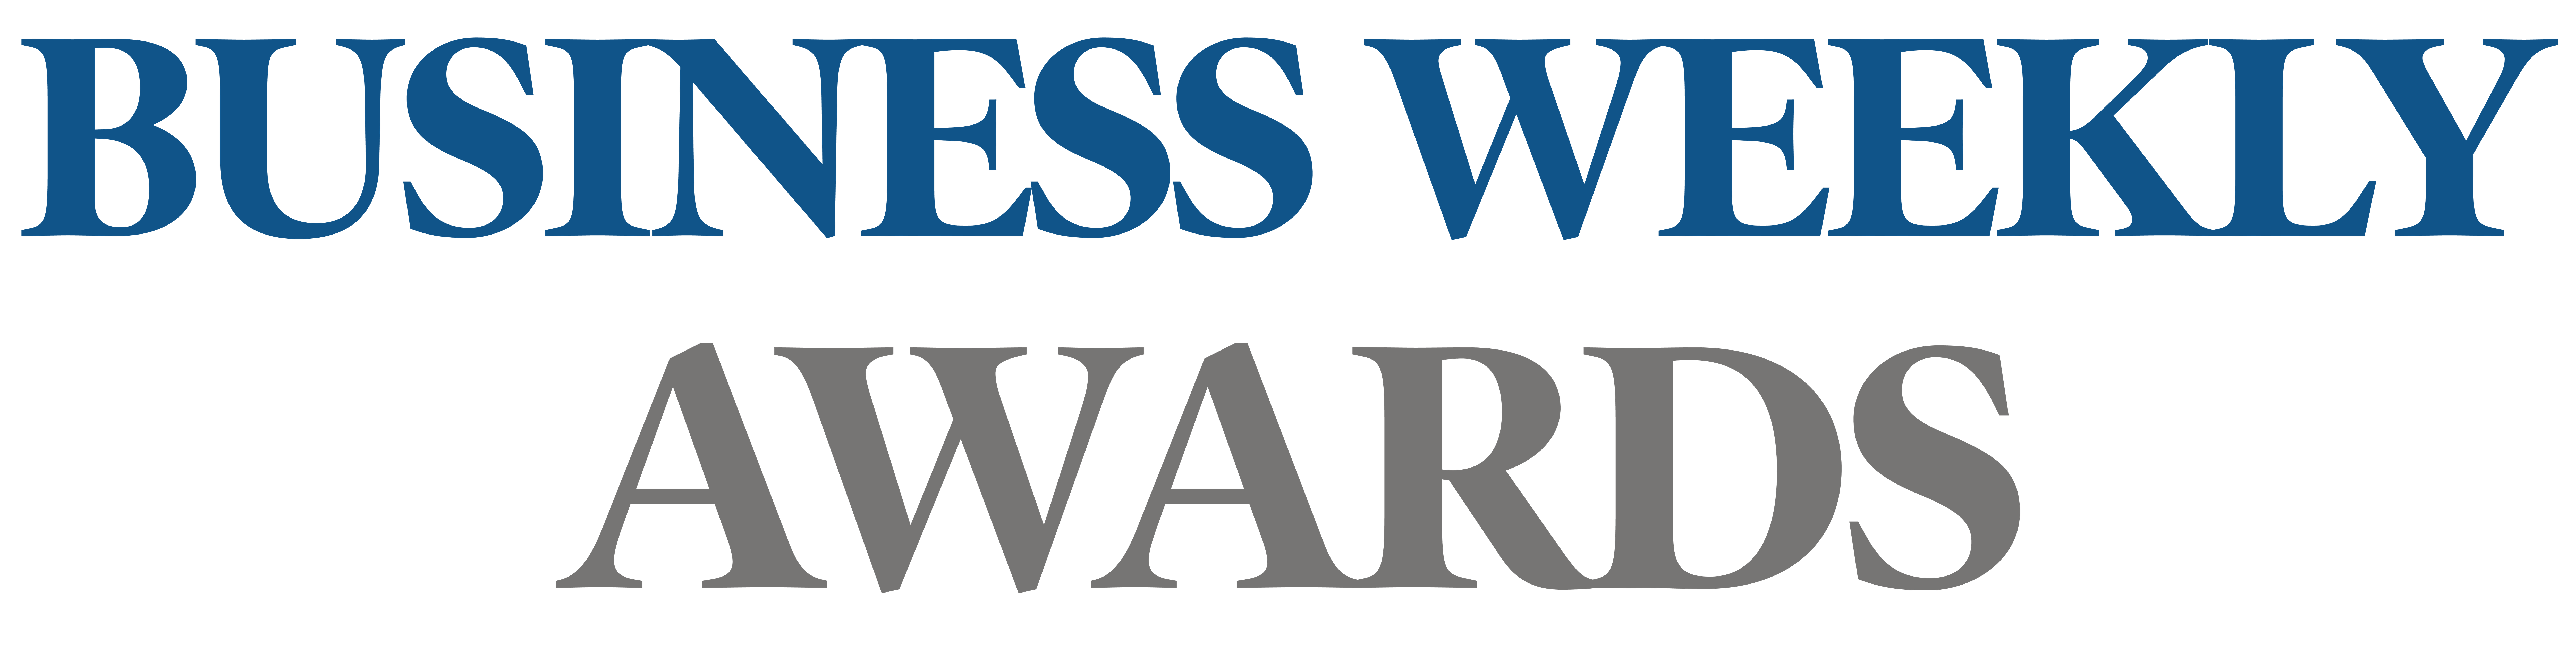 Business Weekly Awards Logo